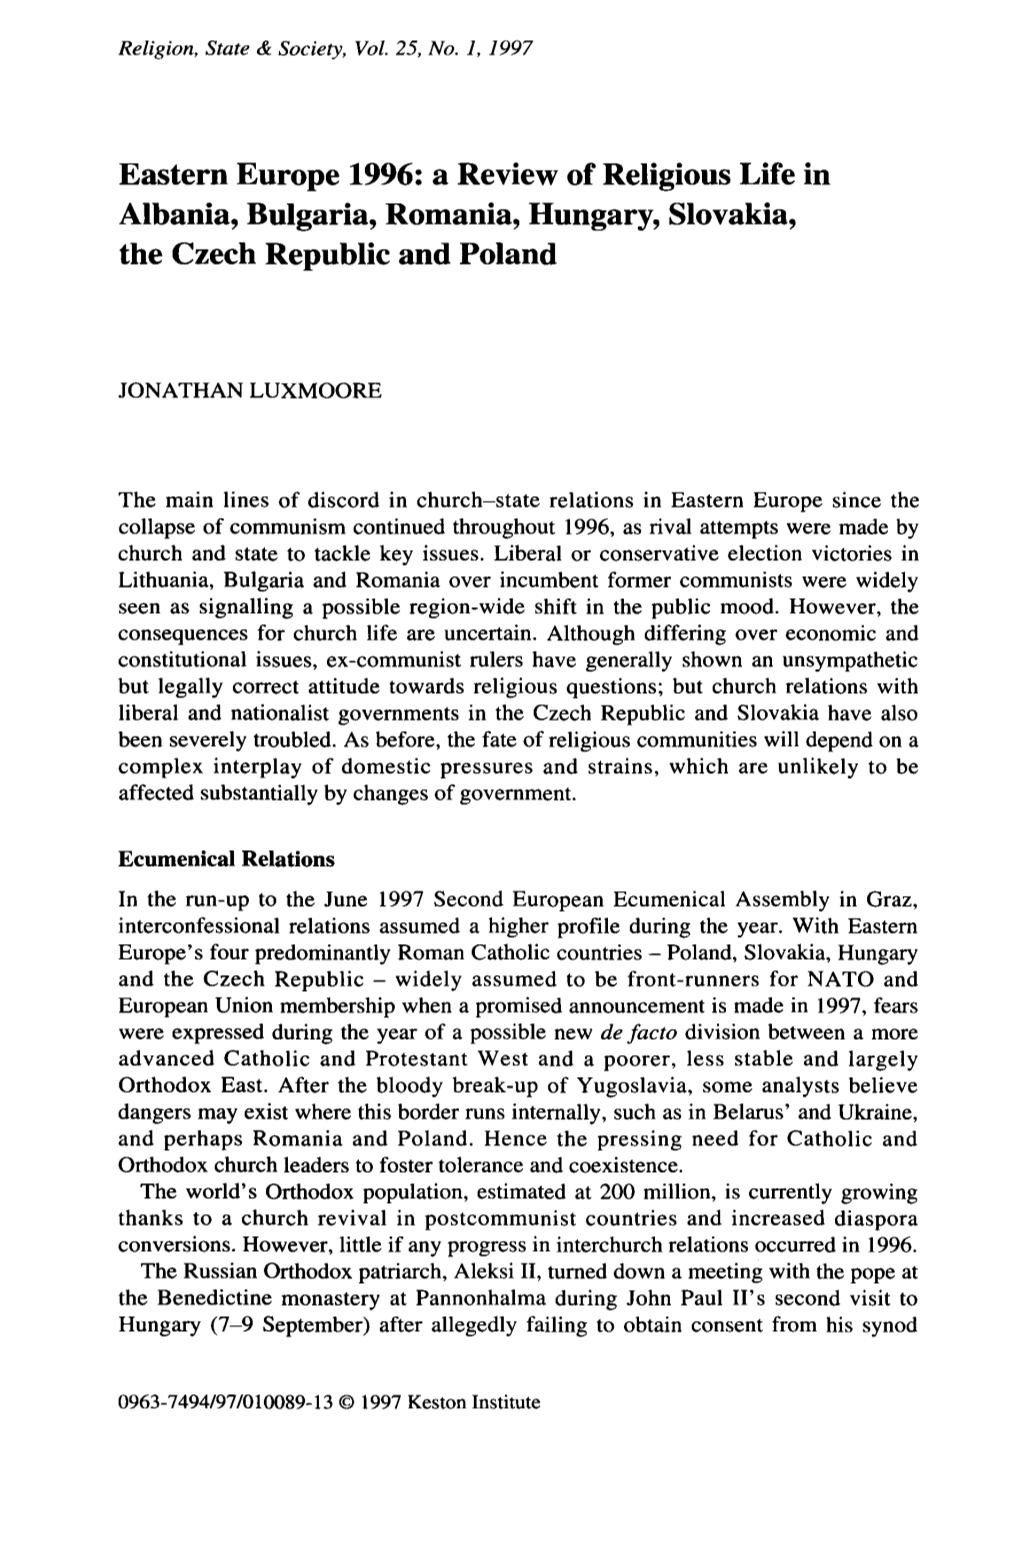 Eastern Europe 1996: a Review of Religious Life in Albania, Bulgaria, Romania, Hungary, Slovakia, the Czech Republic and Poland